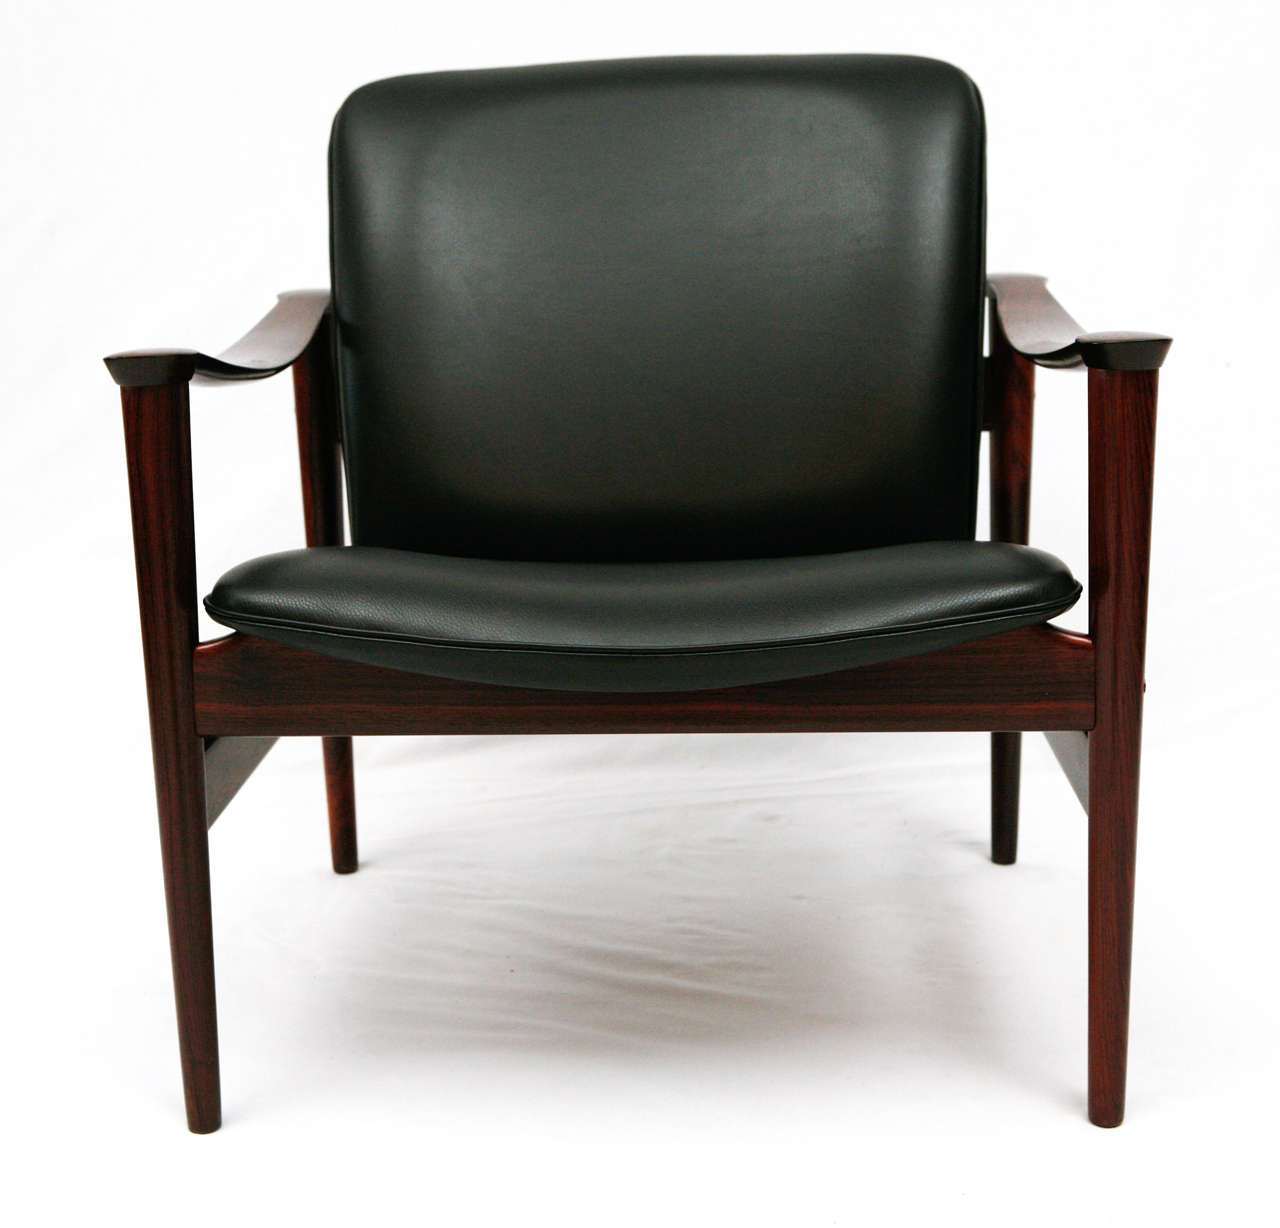 Frederik Kayser Rosewood Model 711 Lounge Chair                     Re-Upholstered in Black Leather Produced by Vatne Lenestolfabrik